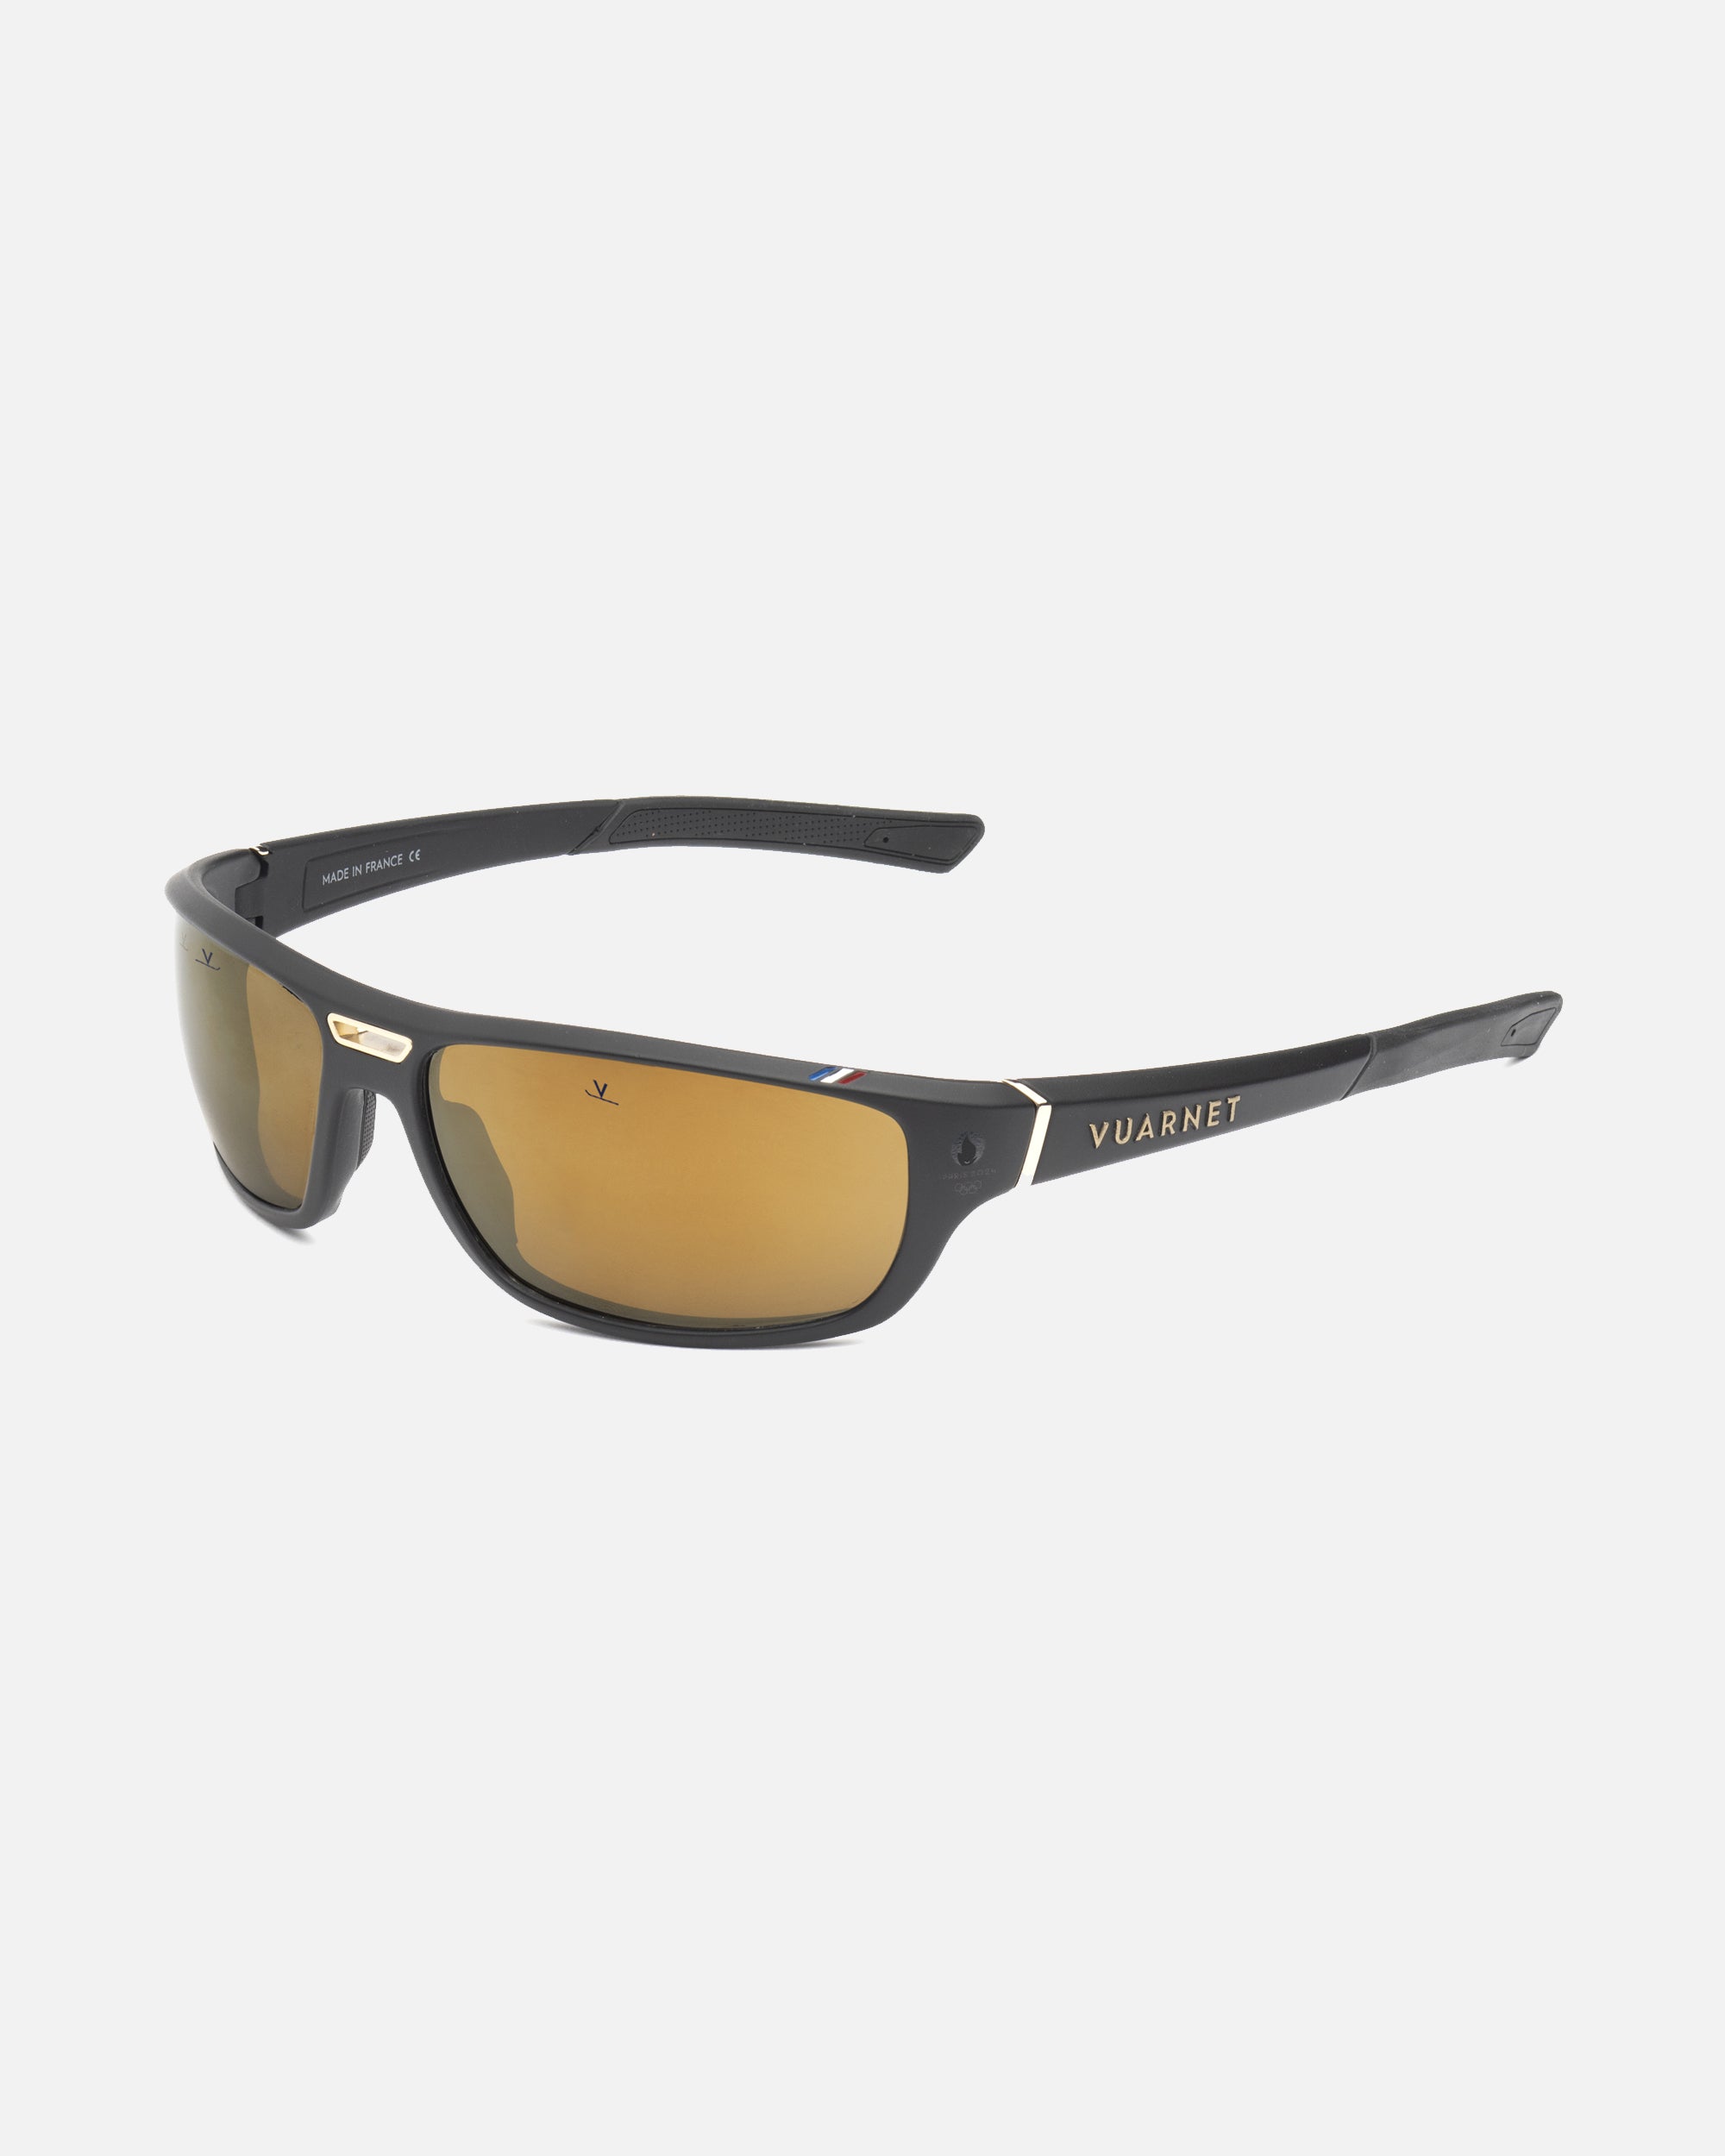 Sunglasses Vuarnet Racing VL1928 0005 64-15 White in stock | Price 120,00 €  | Visiofactory